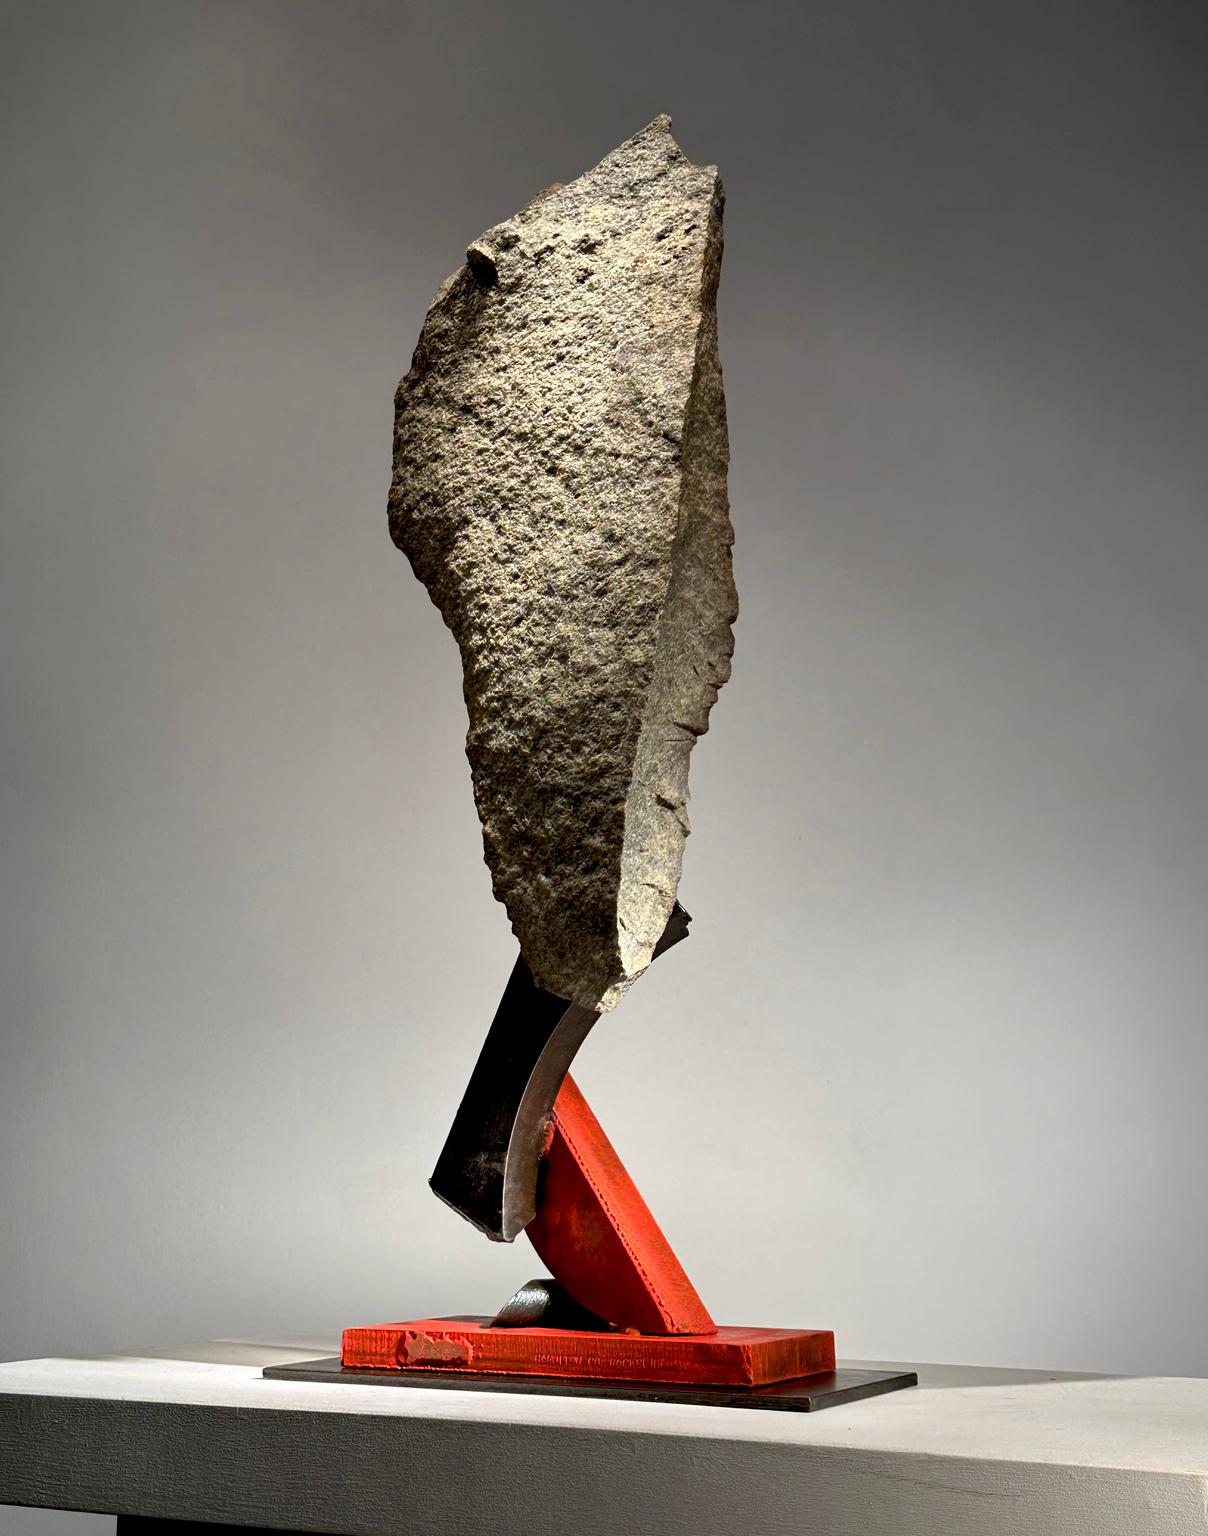 Abstract Sculpture John Van Alstine - "Hamilton Co. Sculpture industrielle, abstraite en métal et pierre « Rockslide »